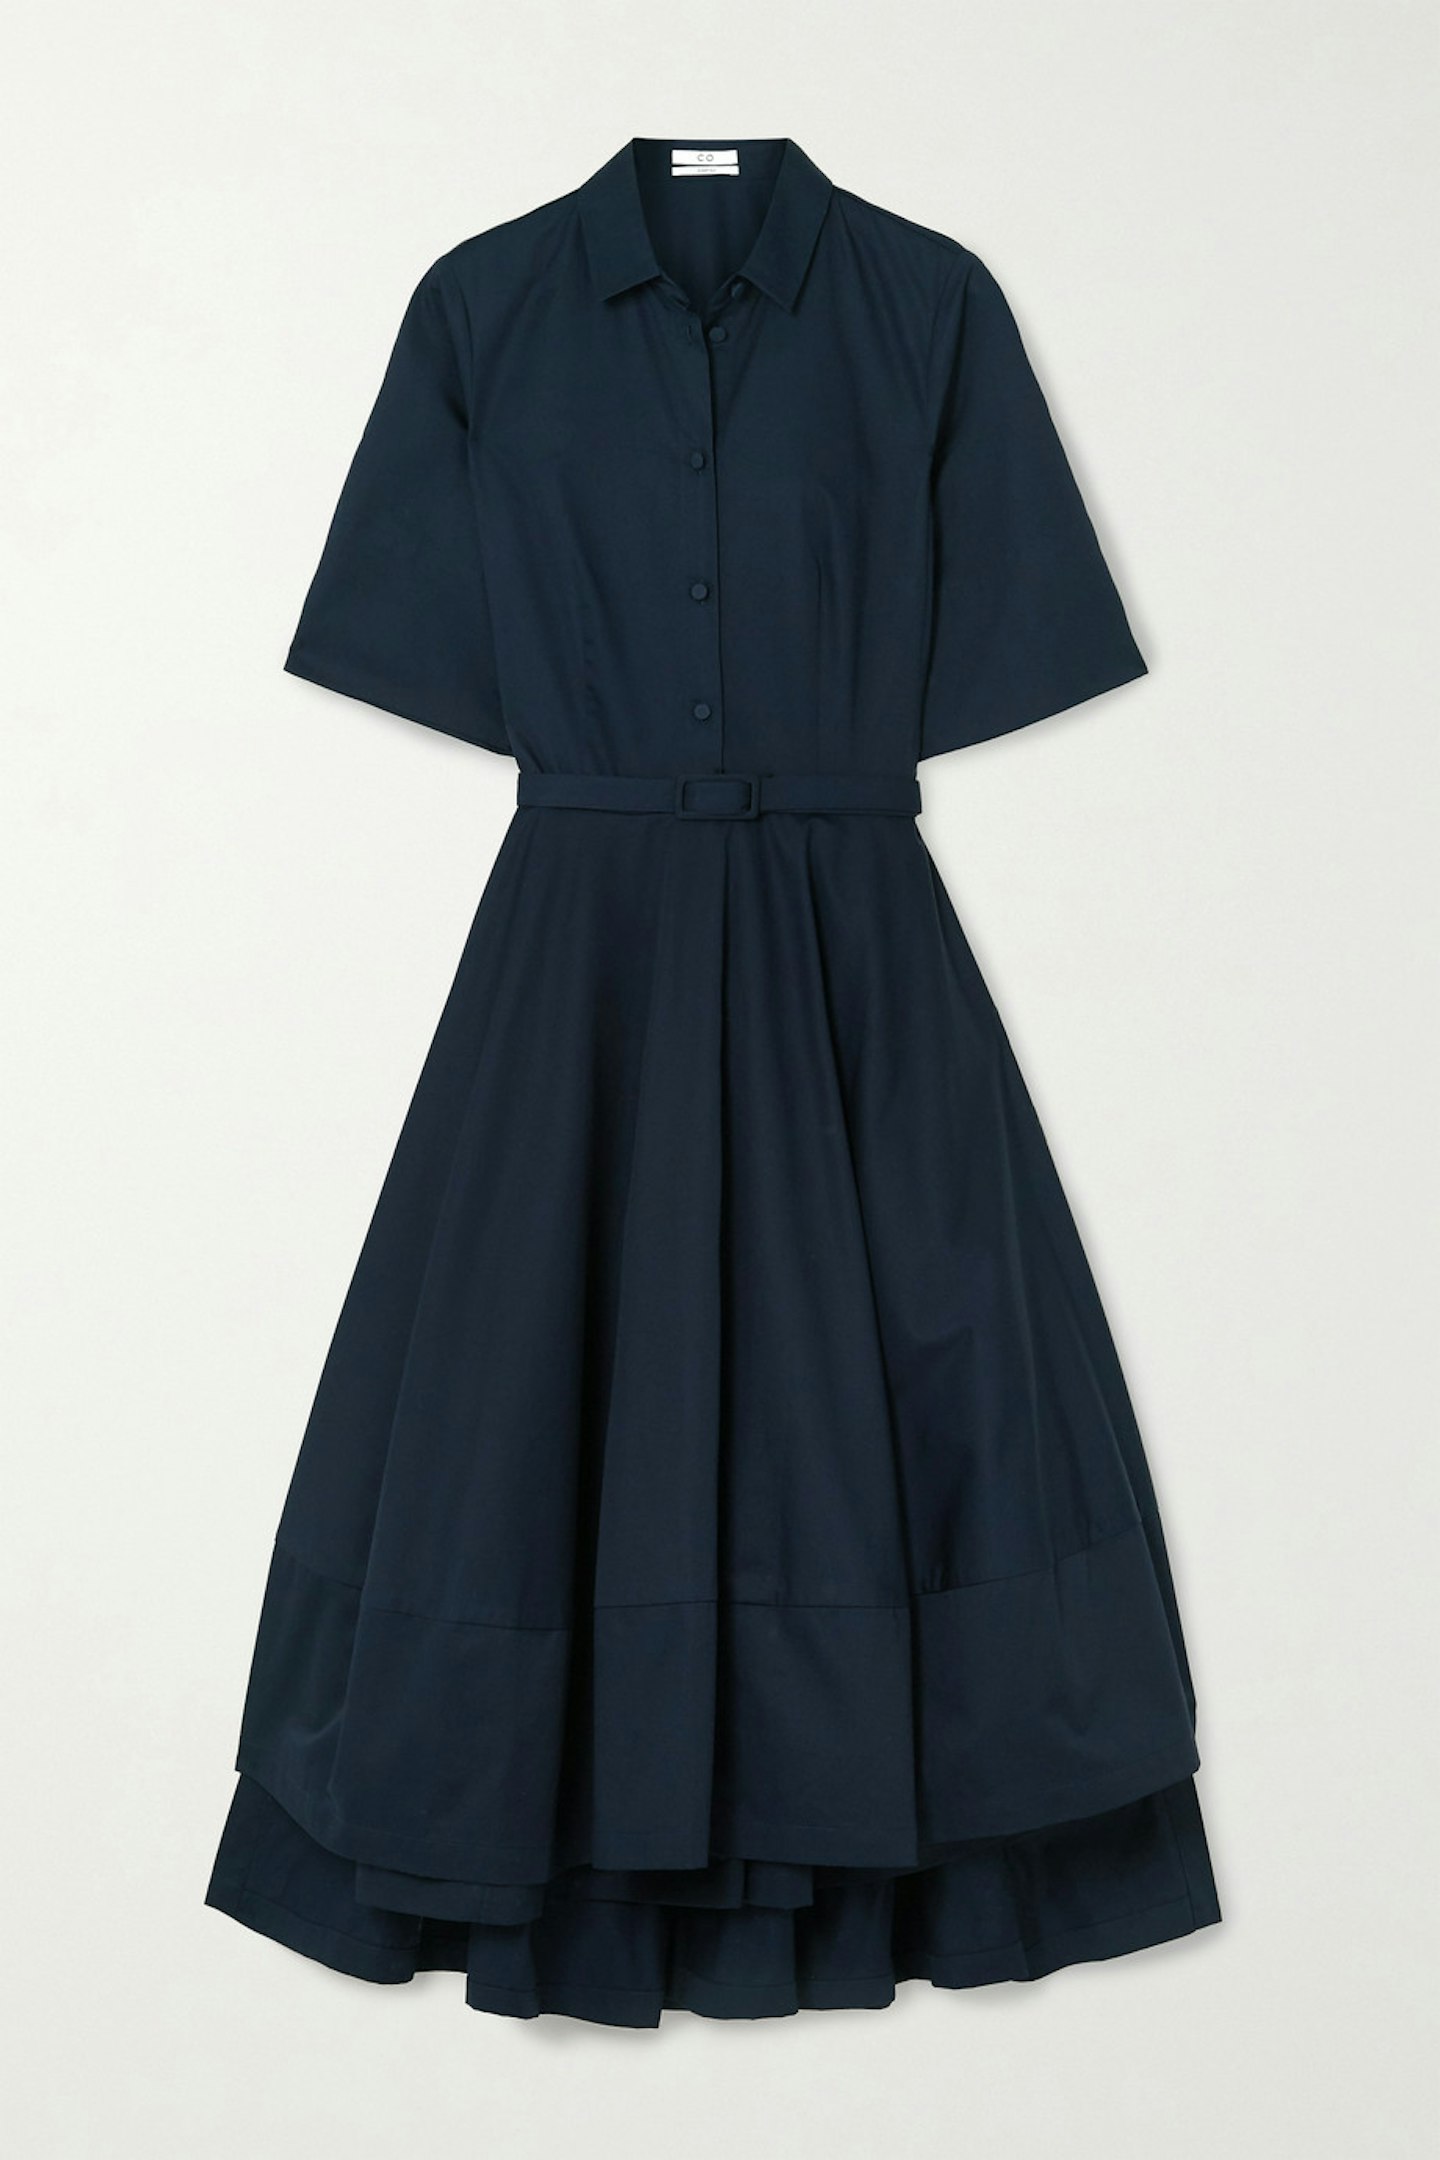 CO, Belted asymmetric pleated cotton-poplin midi shirt dress, £575